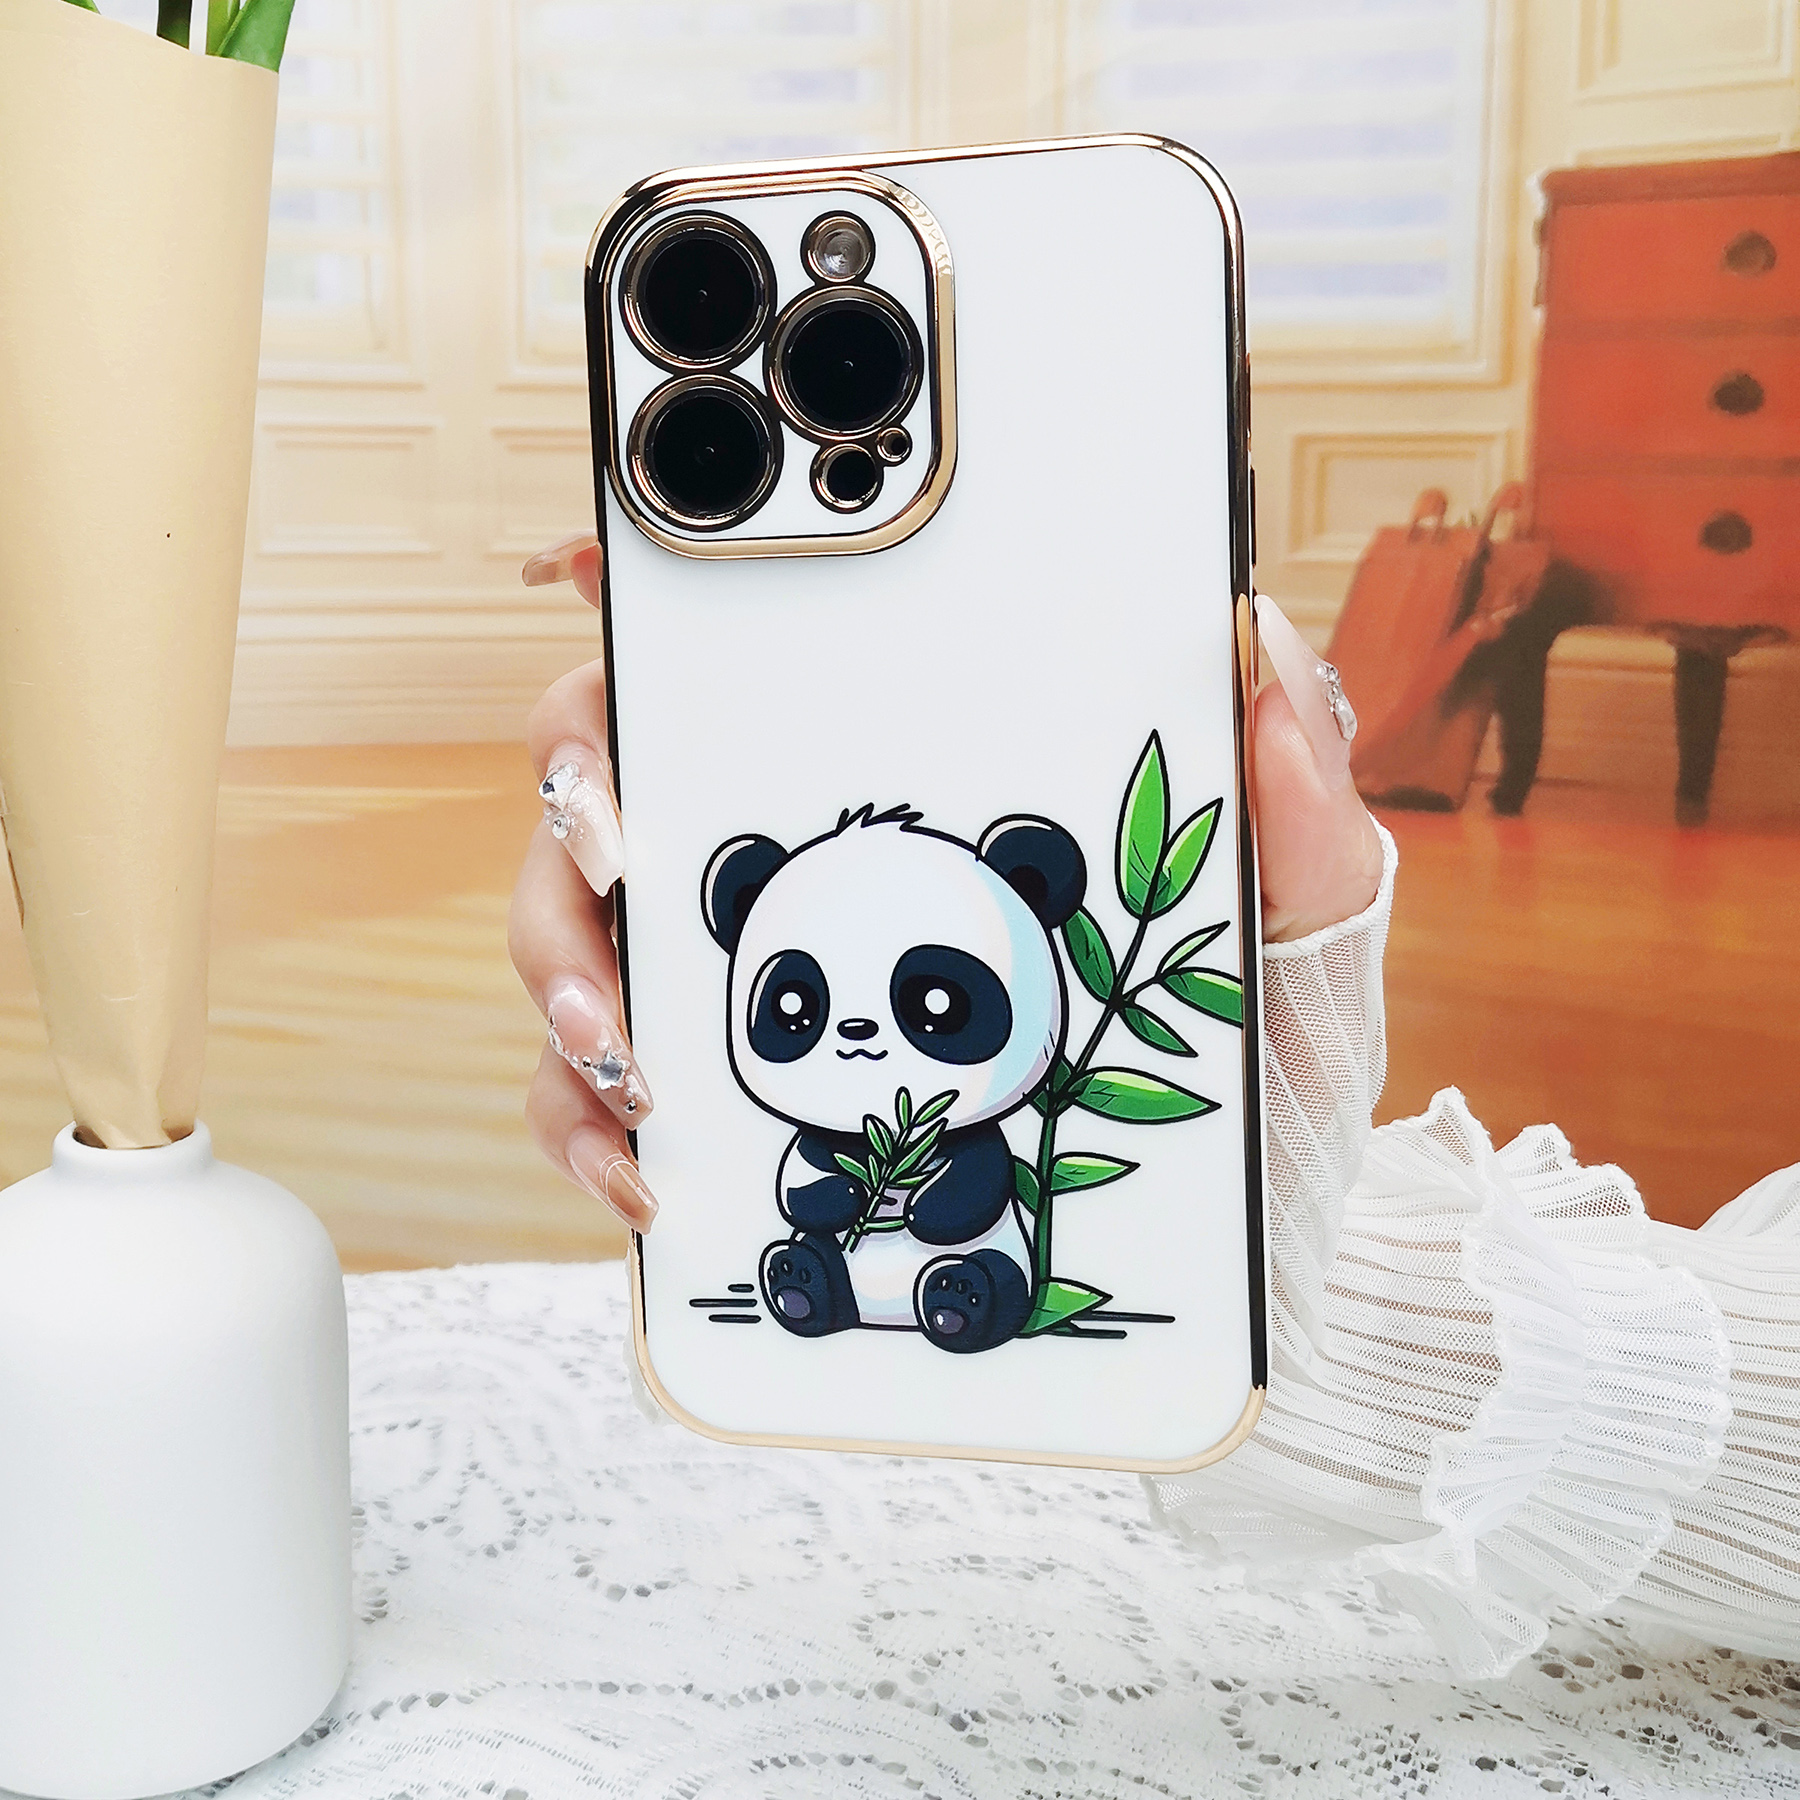  3D Panda Case for iPhone X/7plus/8Plus (Chubby Panda, iPhone  7Plus/8Plus) : Cell Phones & Accessories